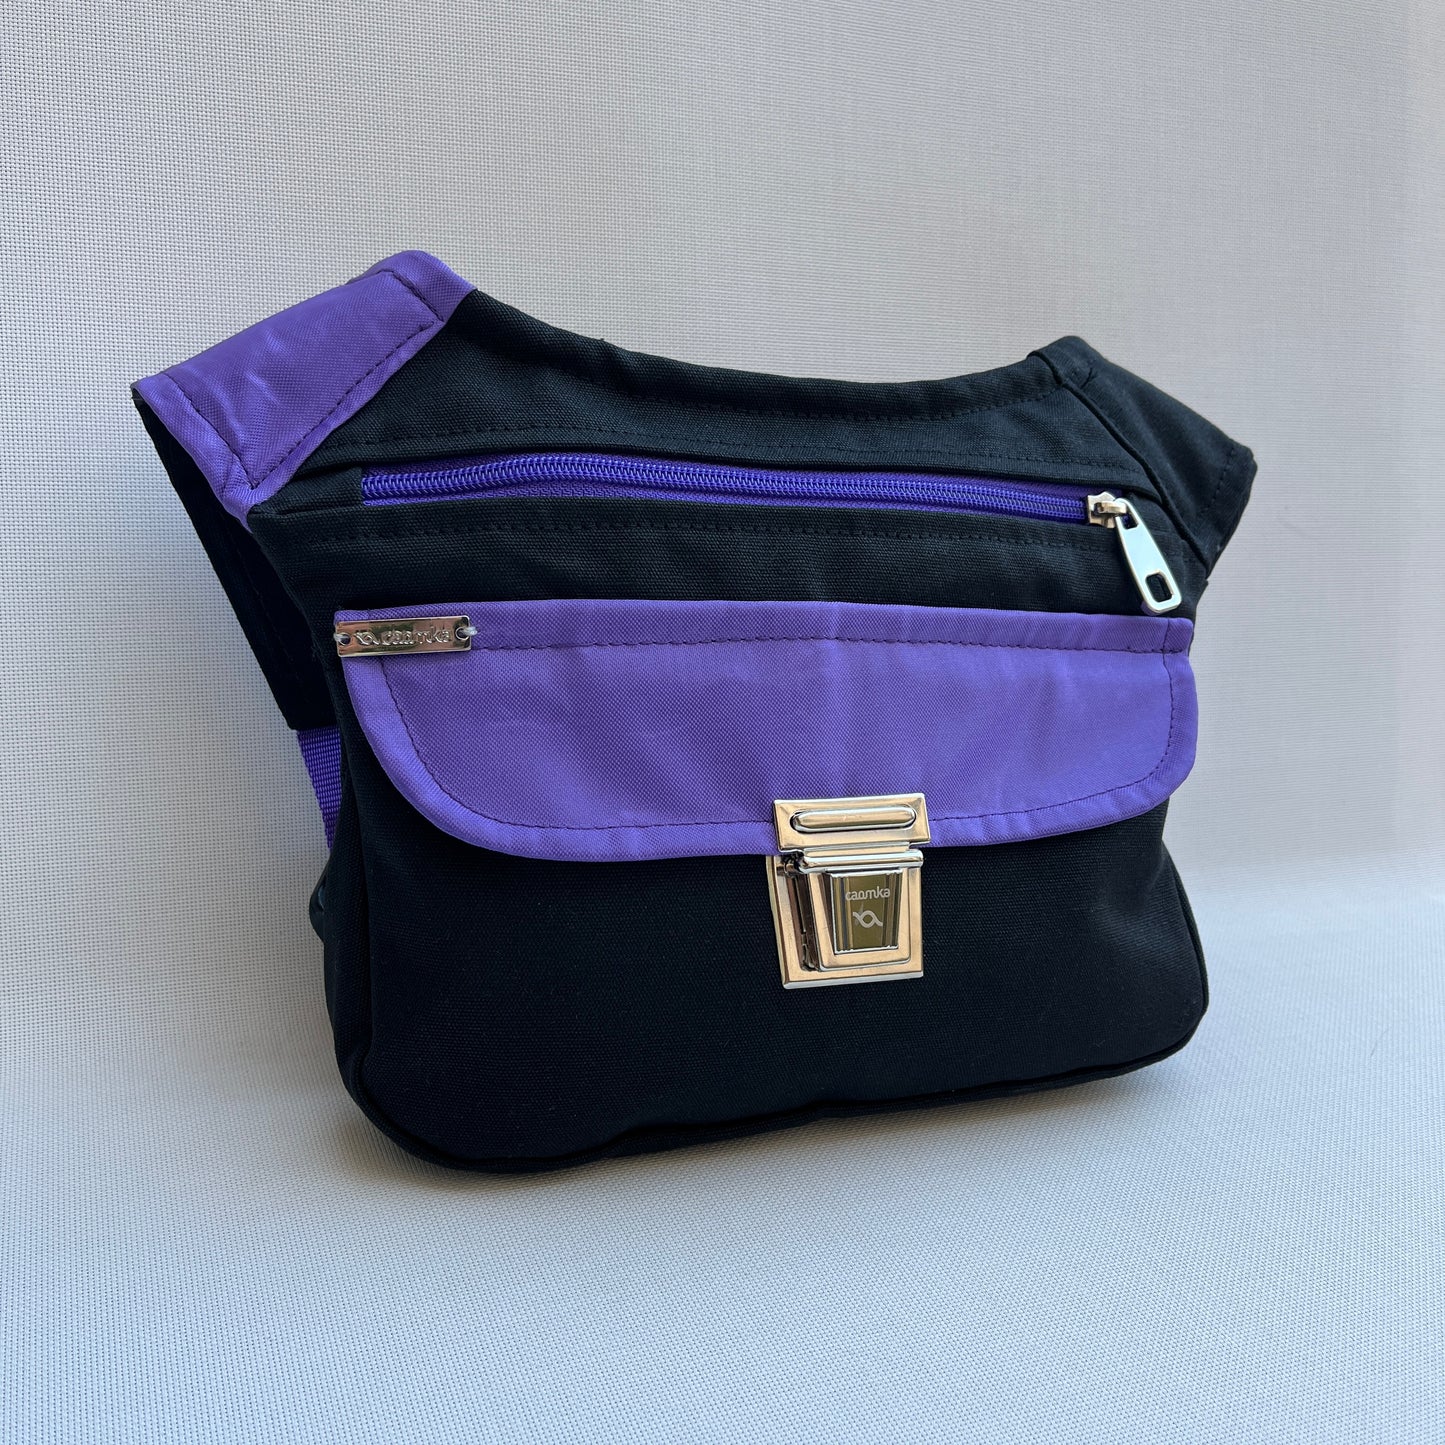 Special Black & Purple + Bolsillo trasero · Pieza Única Núm. 12528